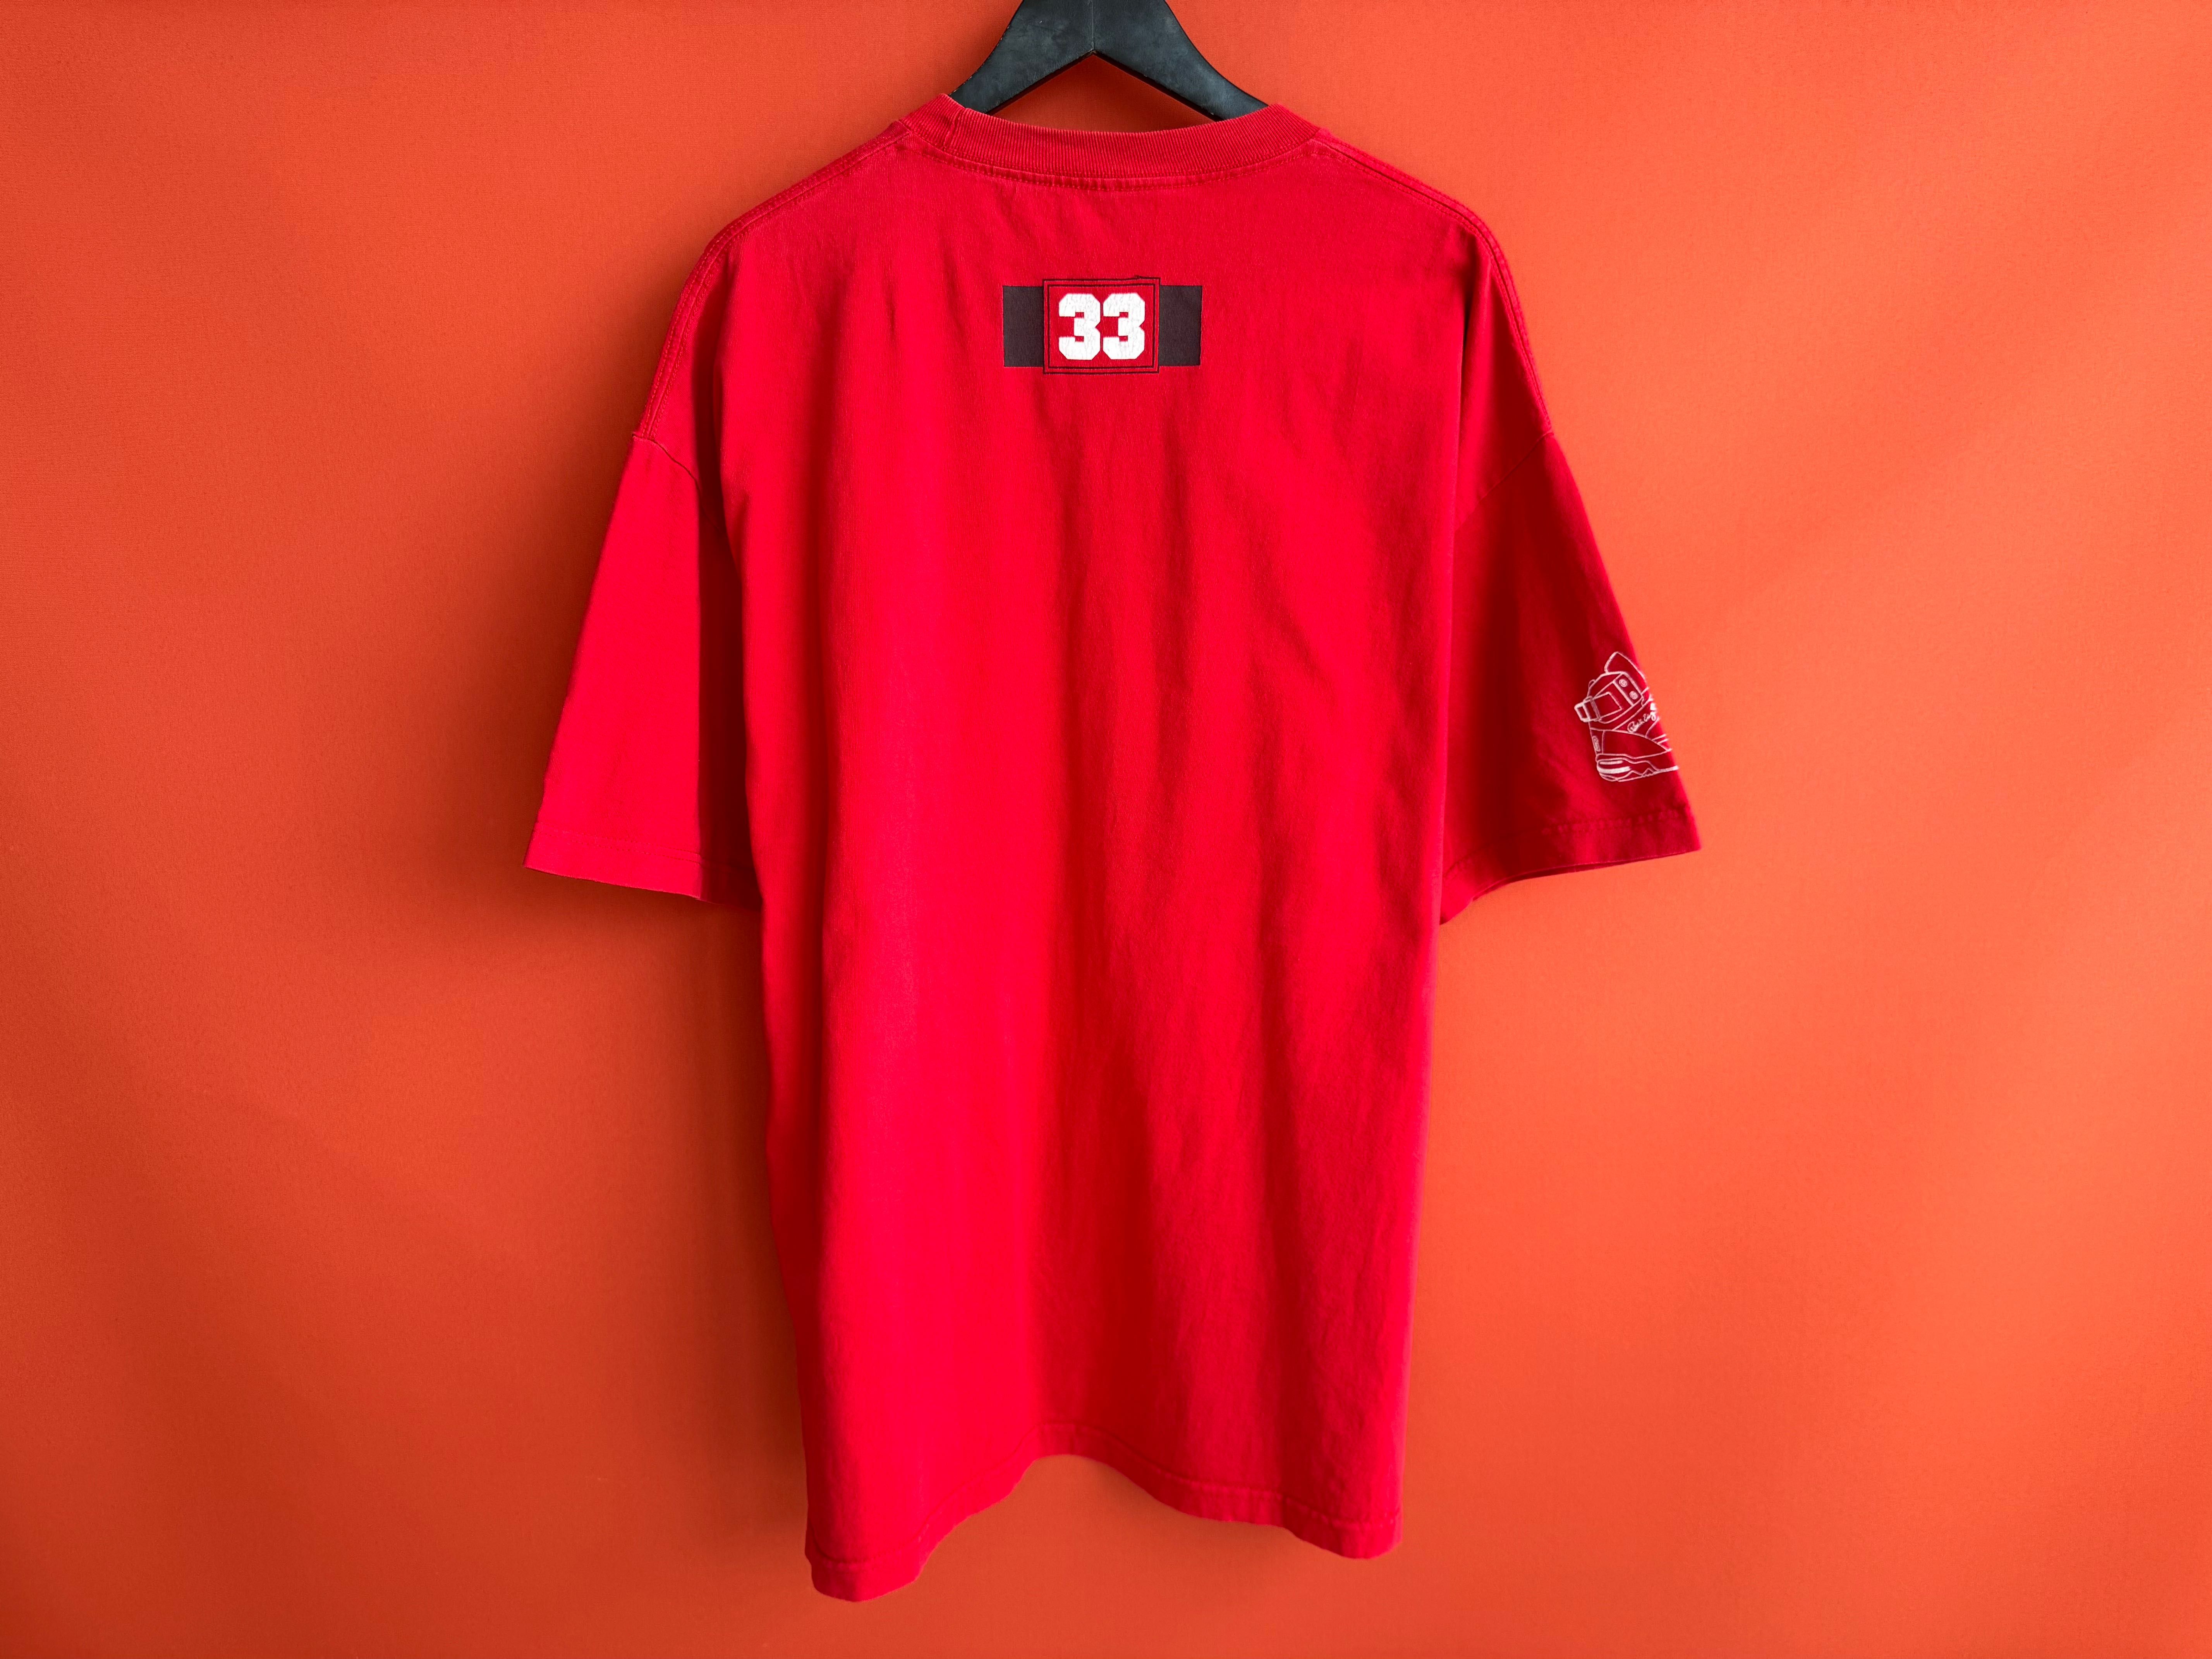 Patrick Ewing 33 Merch USA мужская футболка мерч размер XXL 2XL Б У